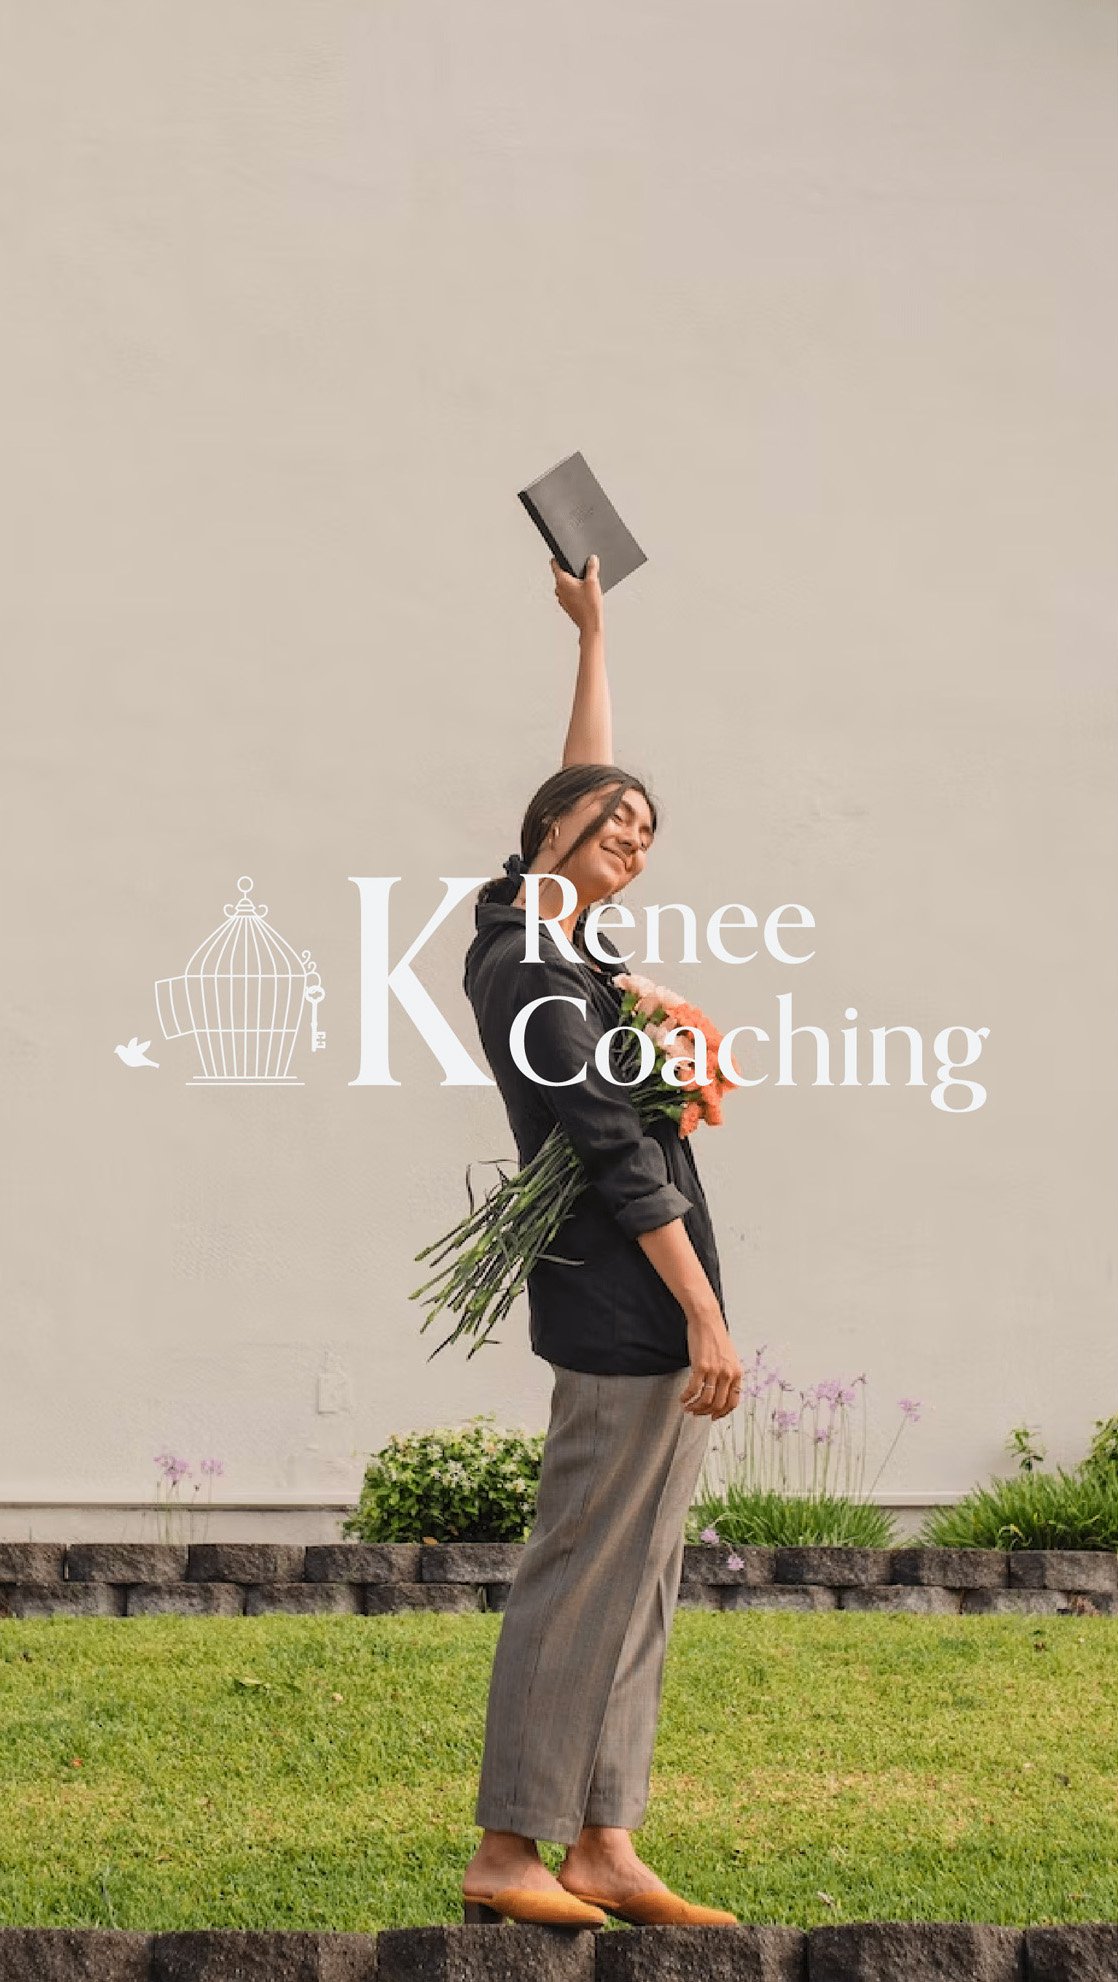 Those-Moment-Design-Co-K-Renee-Coaching-Primary-Logo-Branding